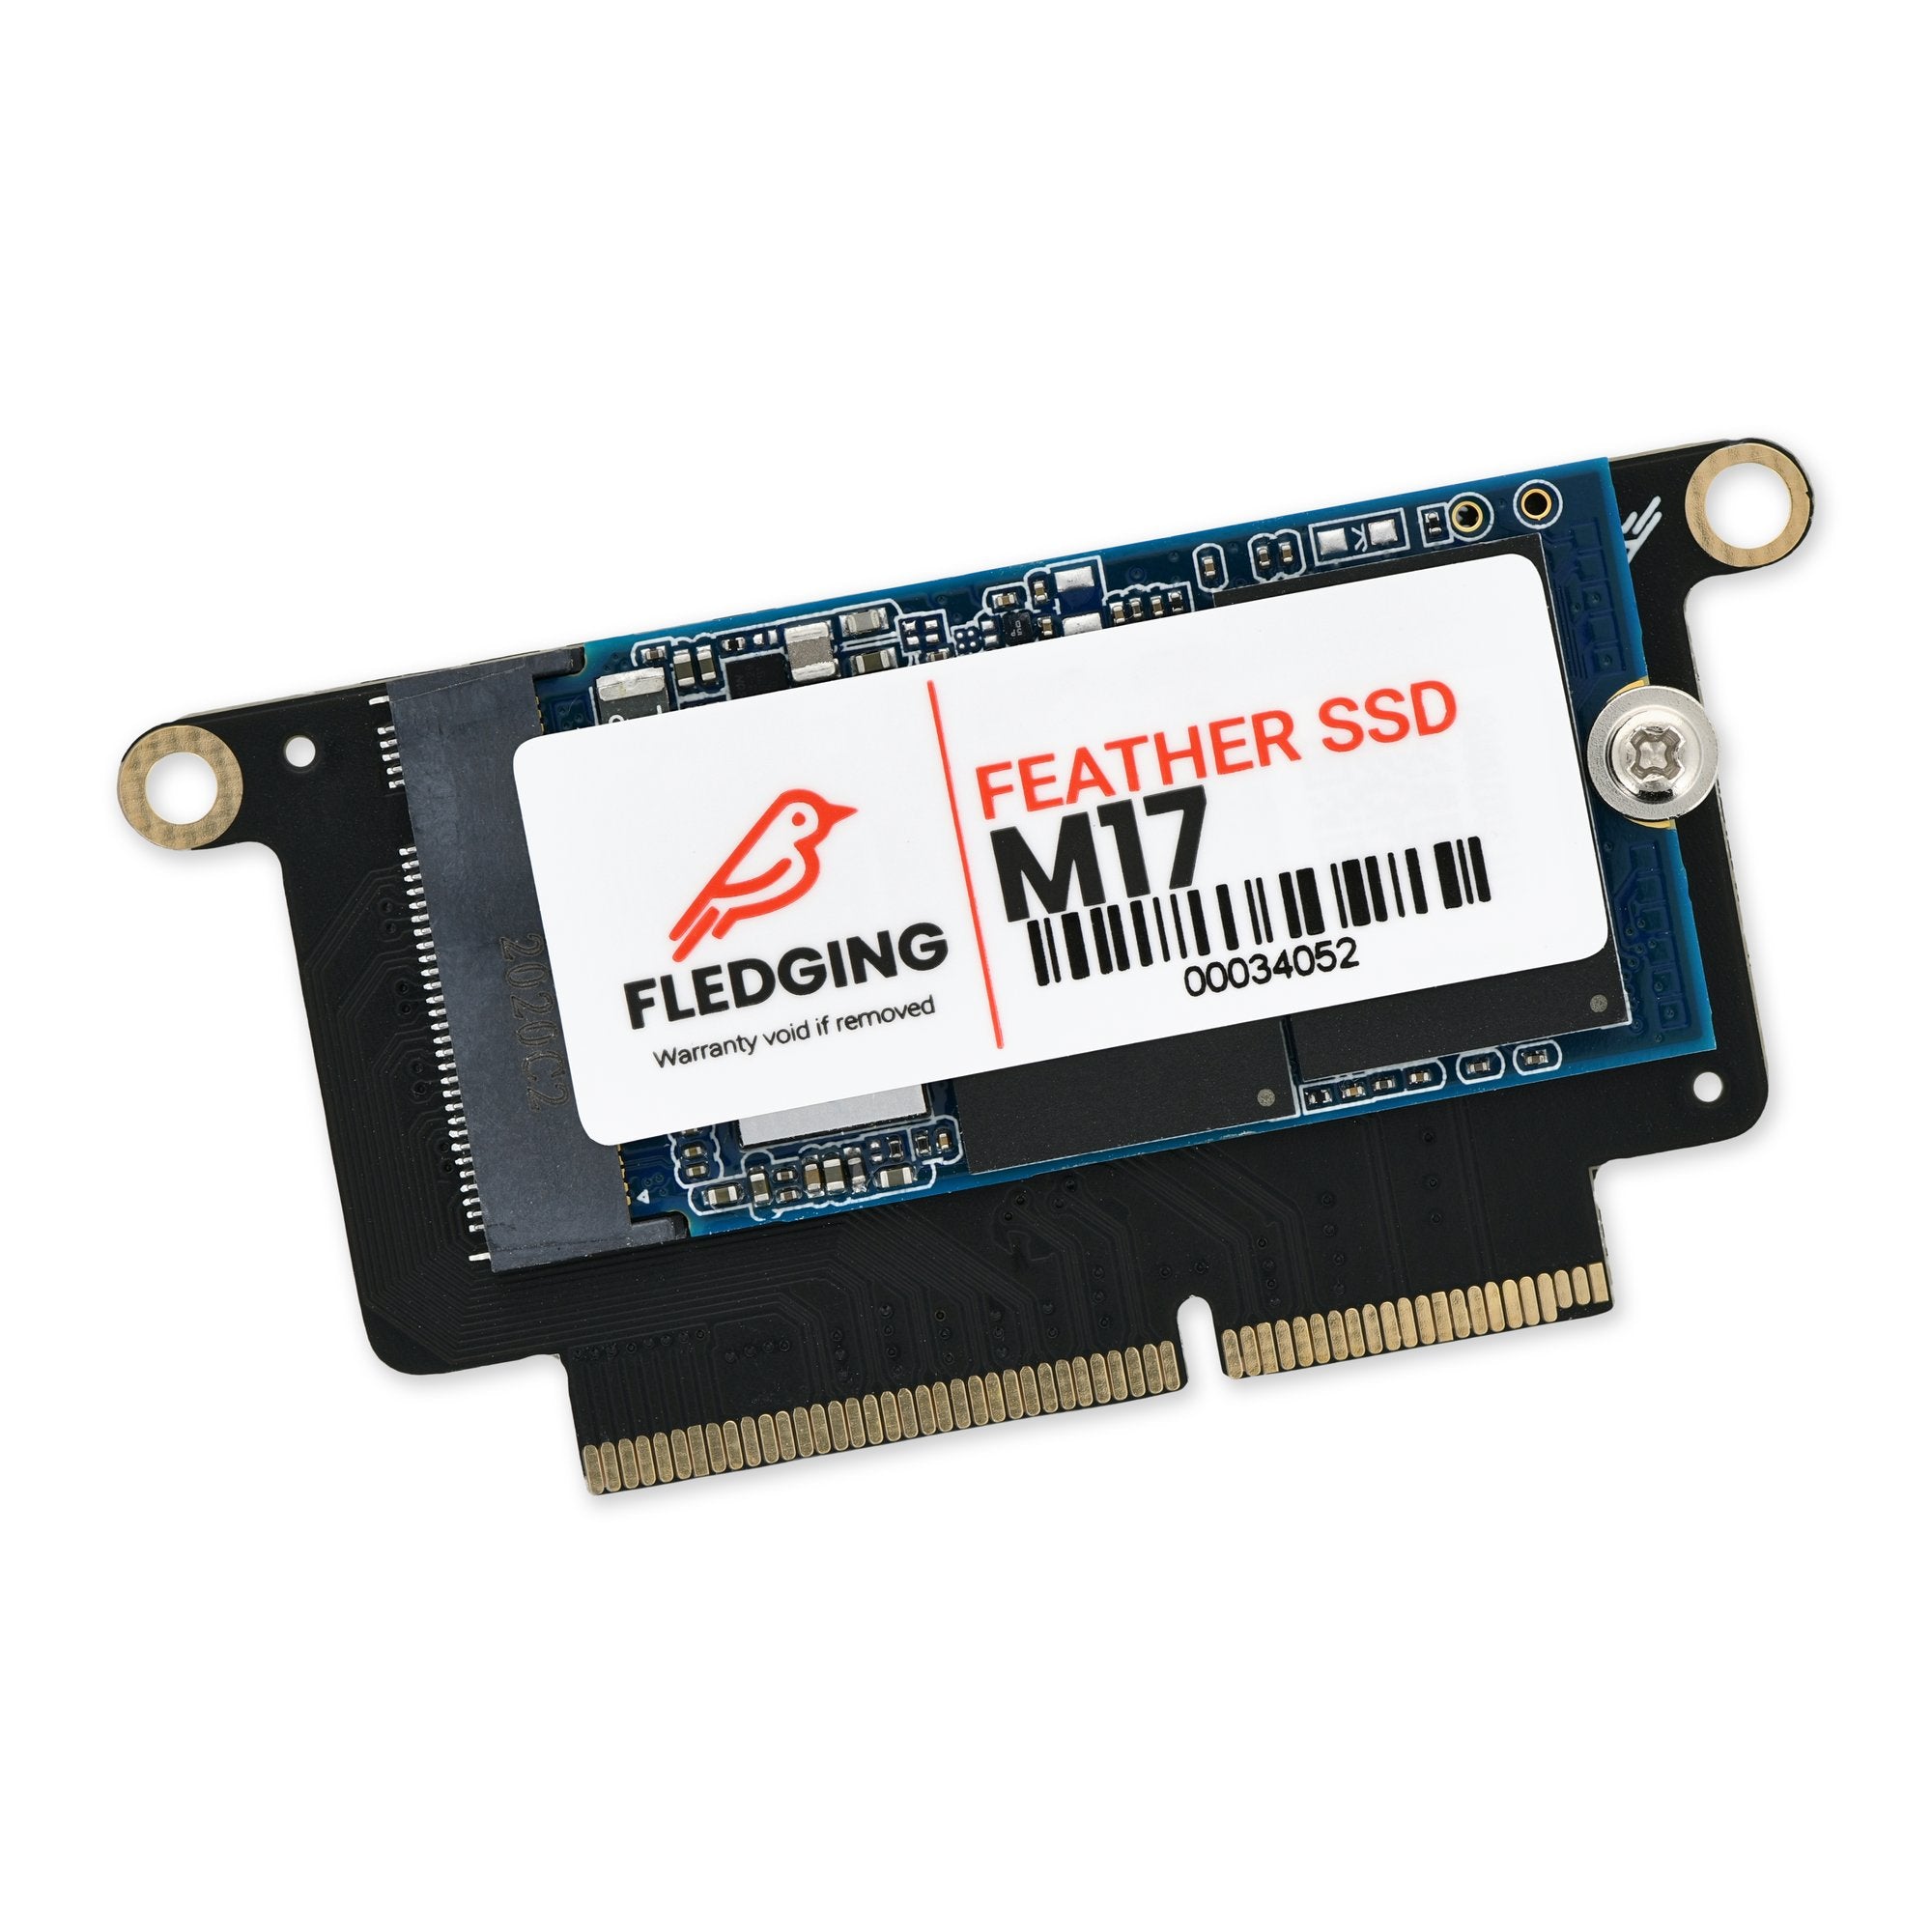 assistent Kalksten Konkurrencedygtige Fledging Feather M17 SSD Upgrade for MacBook Pro 13" A1708